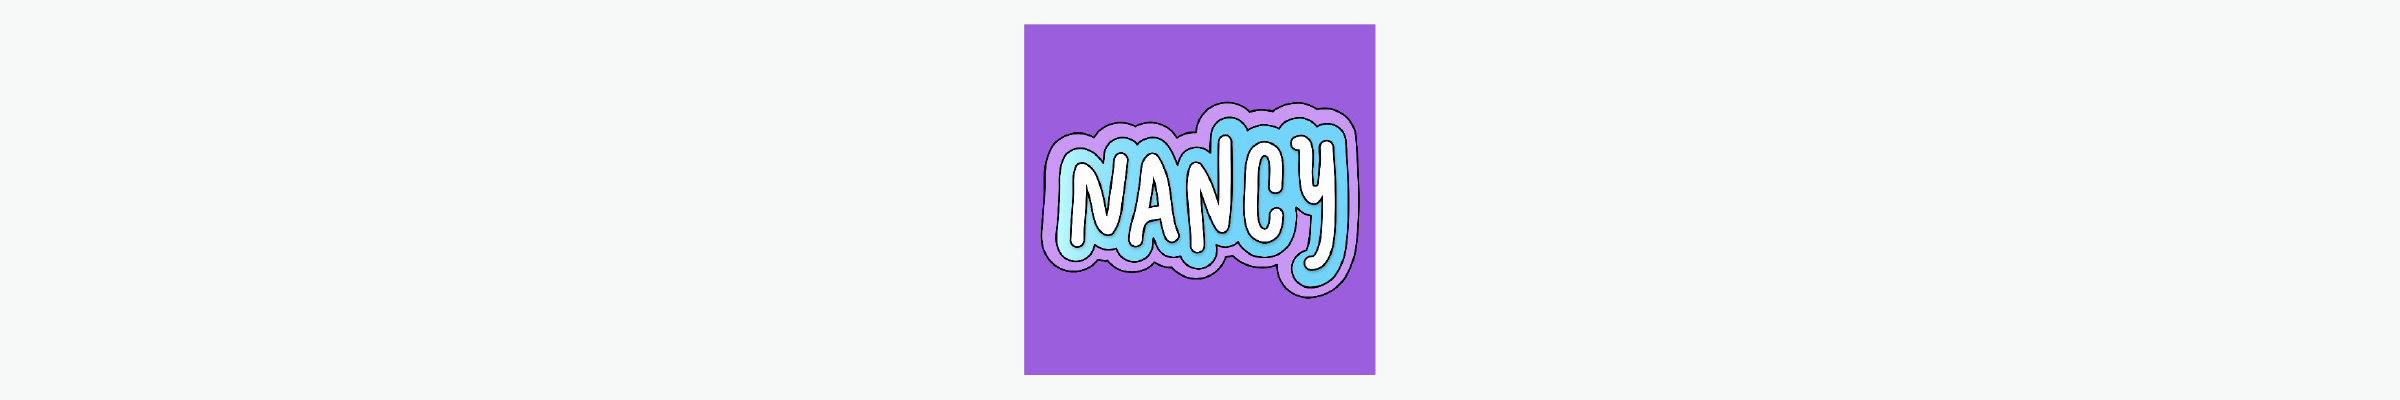 Banner showing Nancy podcast